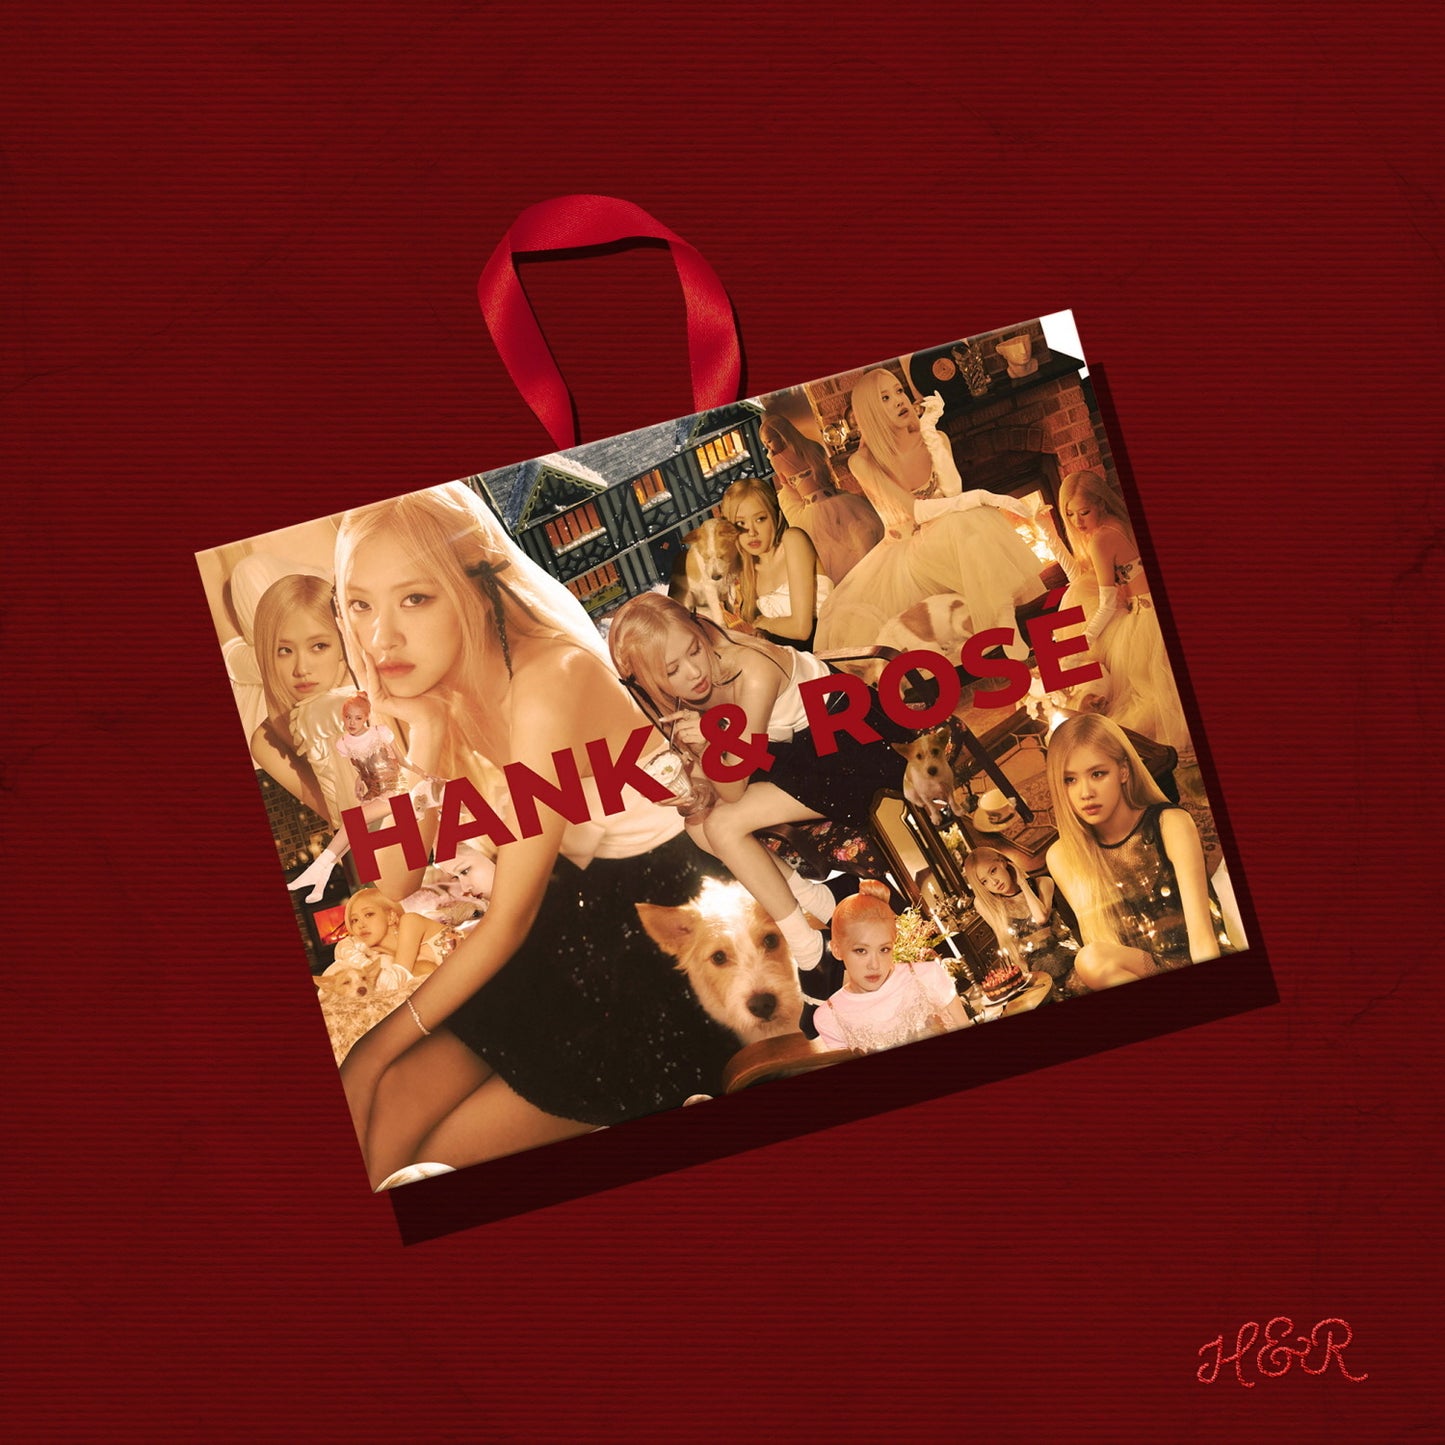 BLACKPINK - ROSÉ - 2024 Season’s Greetings: From HANK & ROSÉ To You